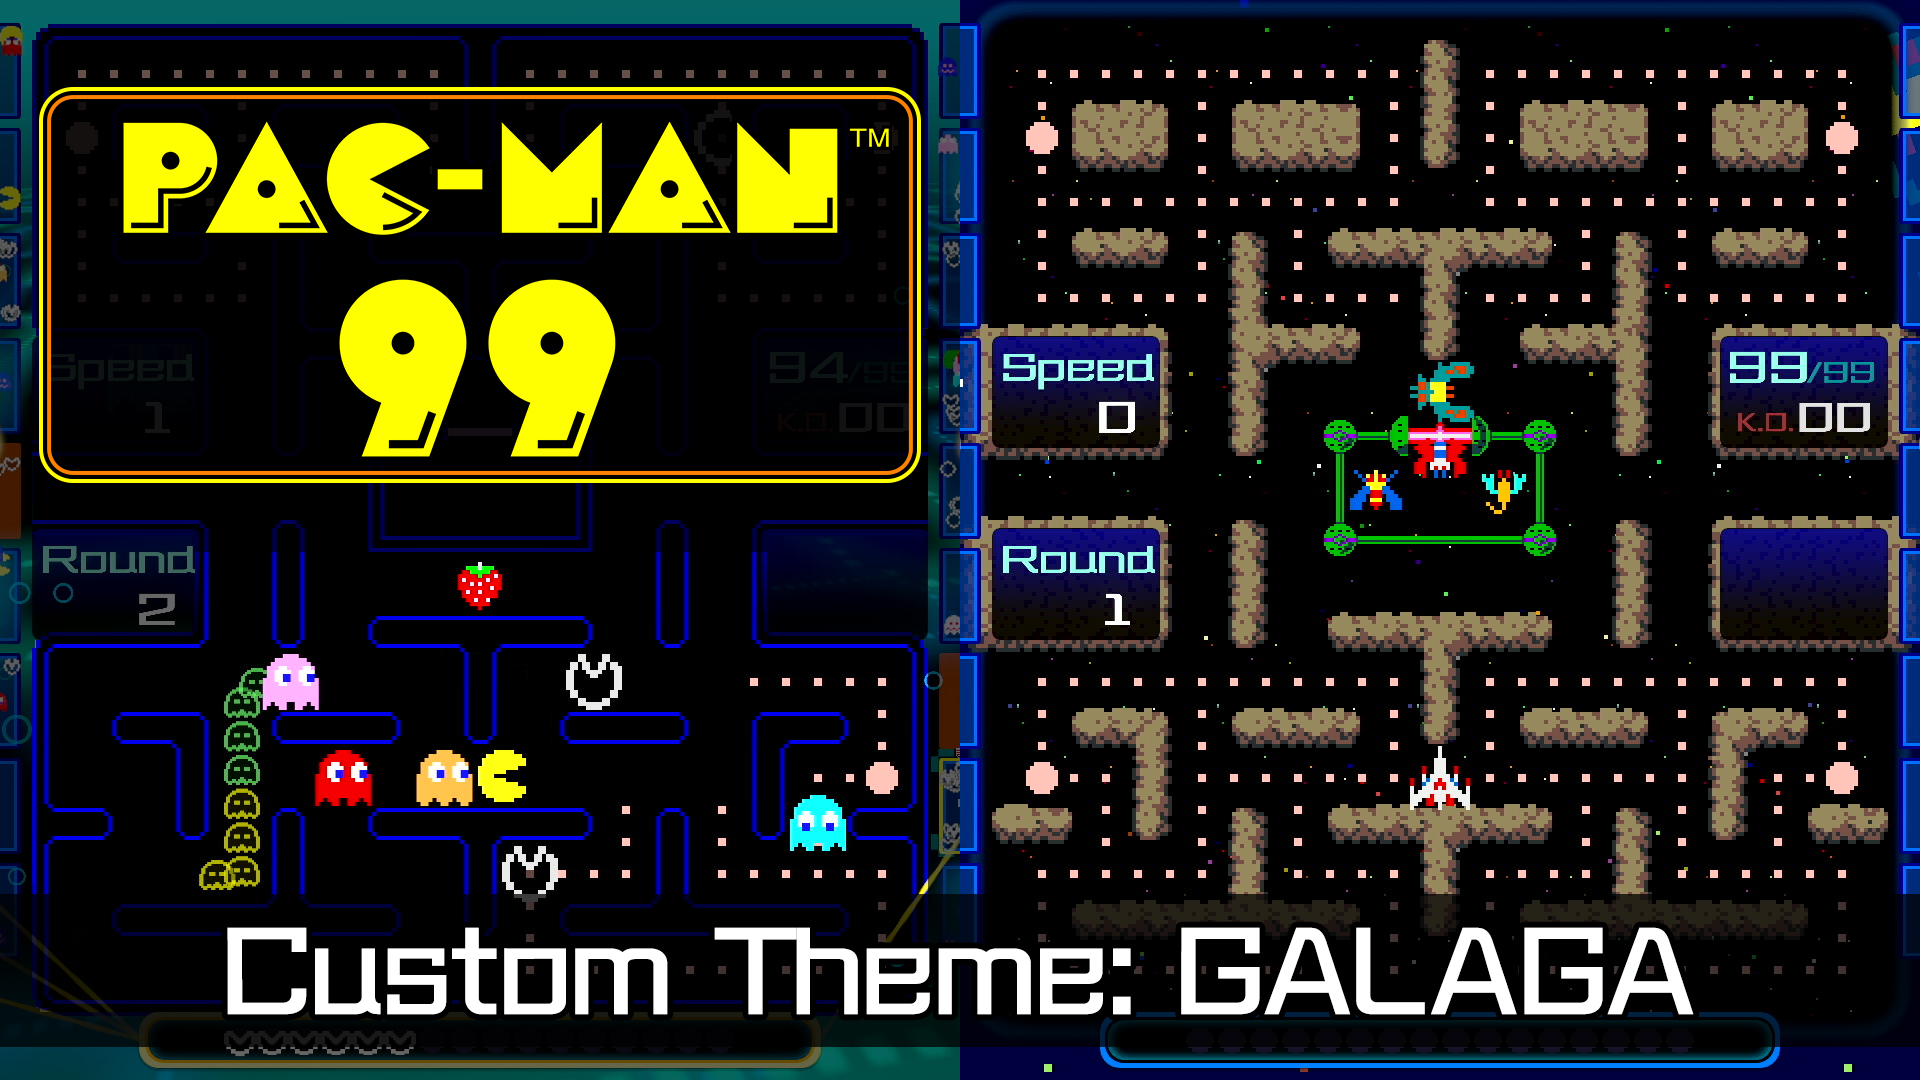 PAC-MAN 99 Custom Theme: GALAGA